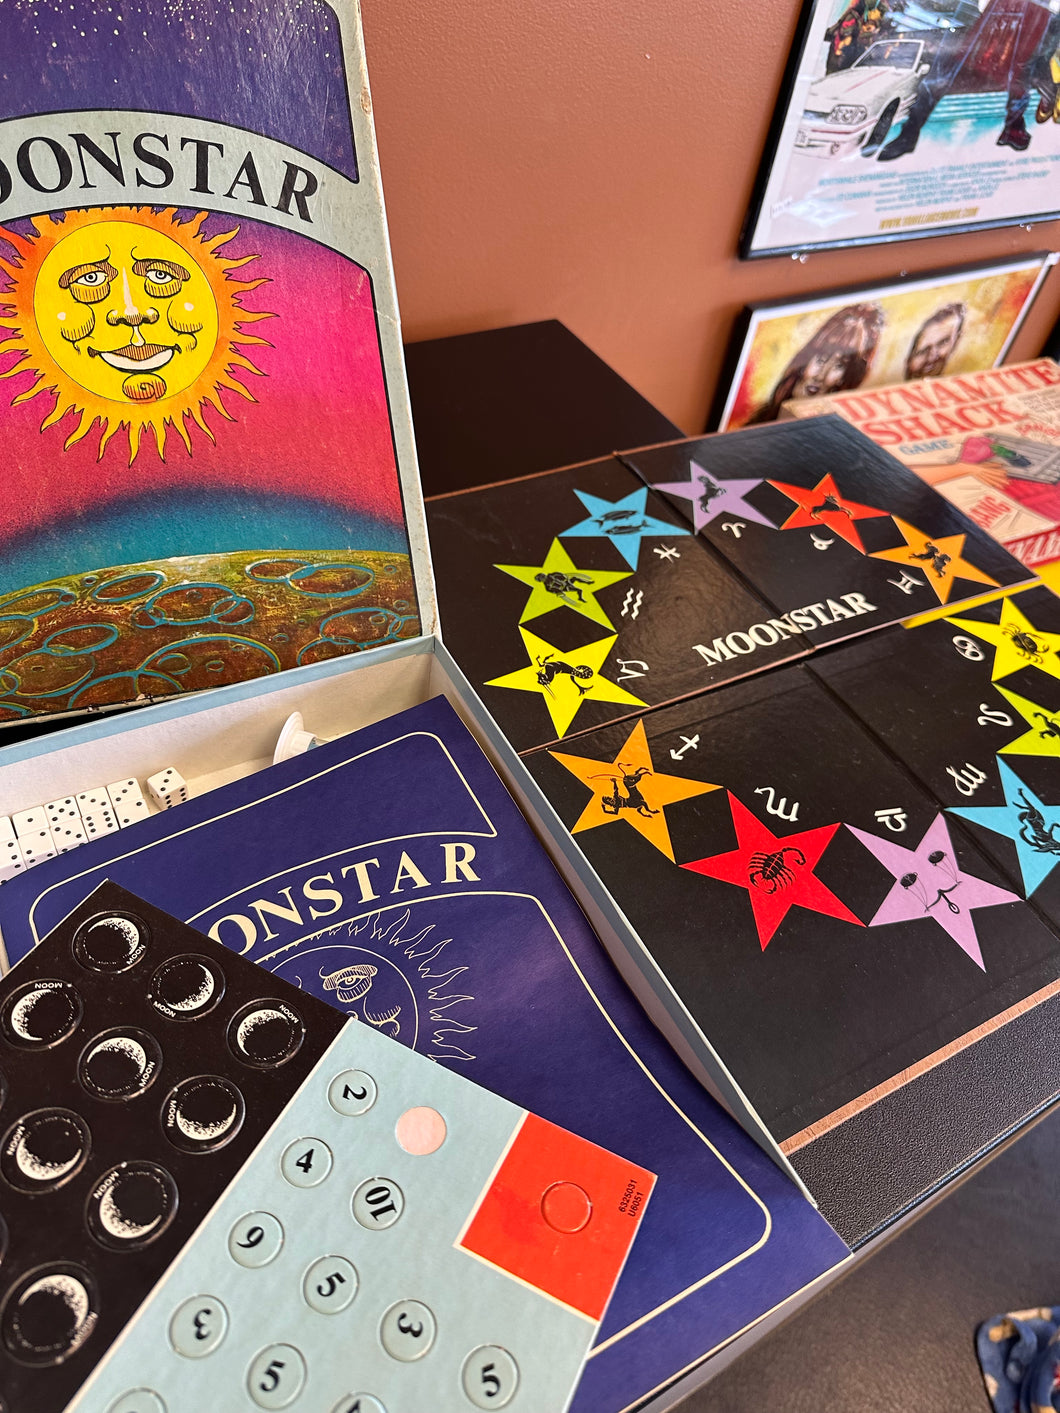 Moonstar Avalon Hill Strategy Bookshelf Game Preowned